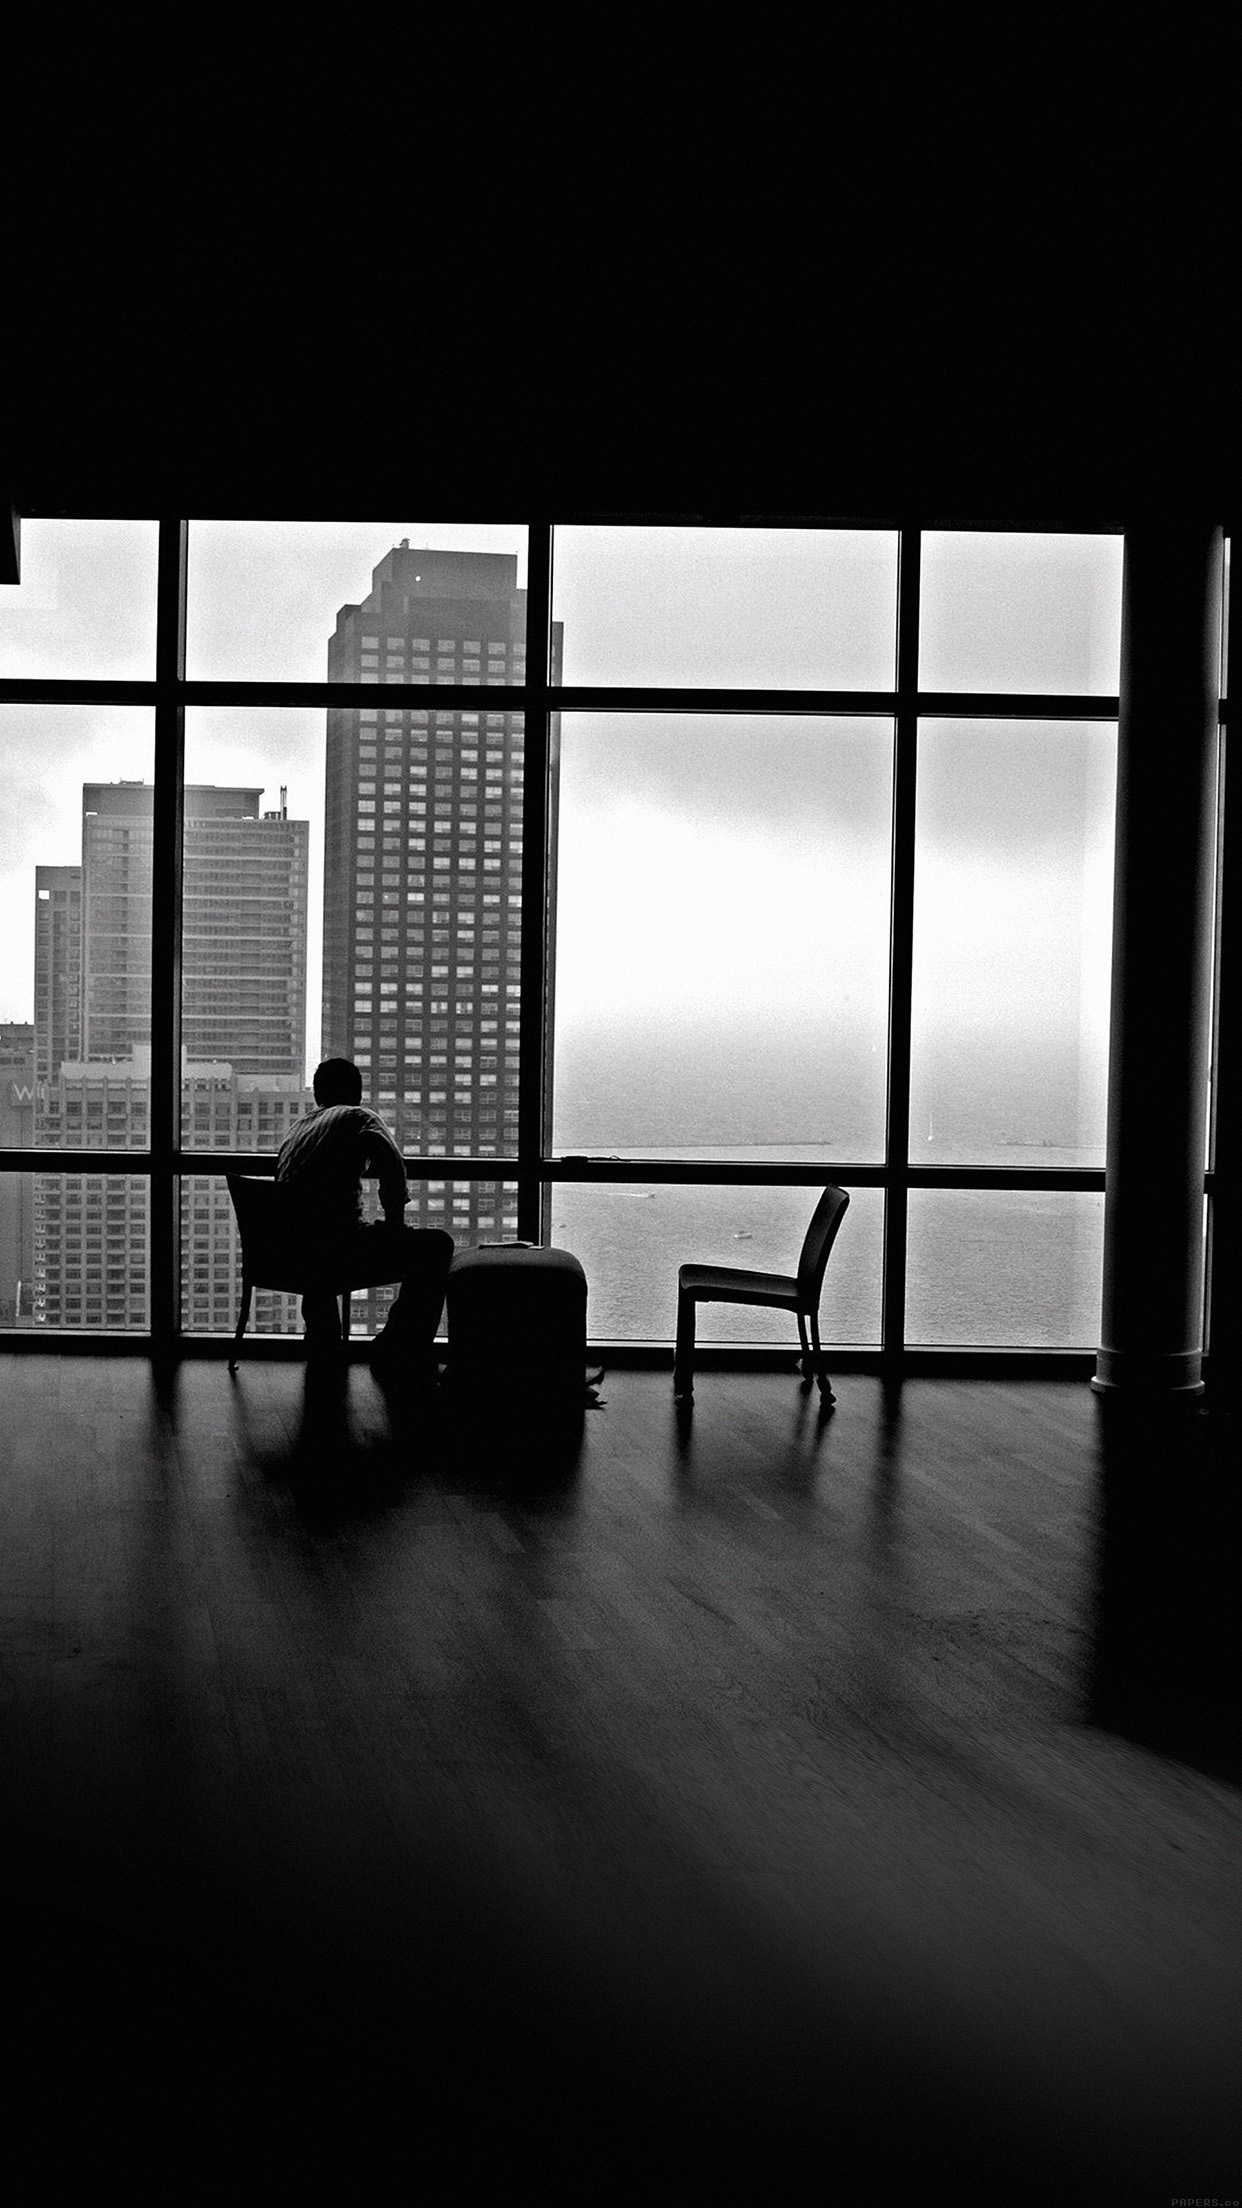 Man Alone Apartment Skyscrapers View iPhone 6 Plus HD Wallpaper